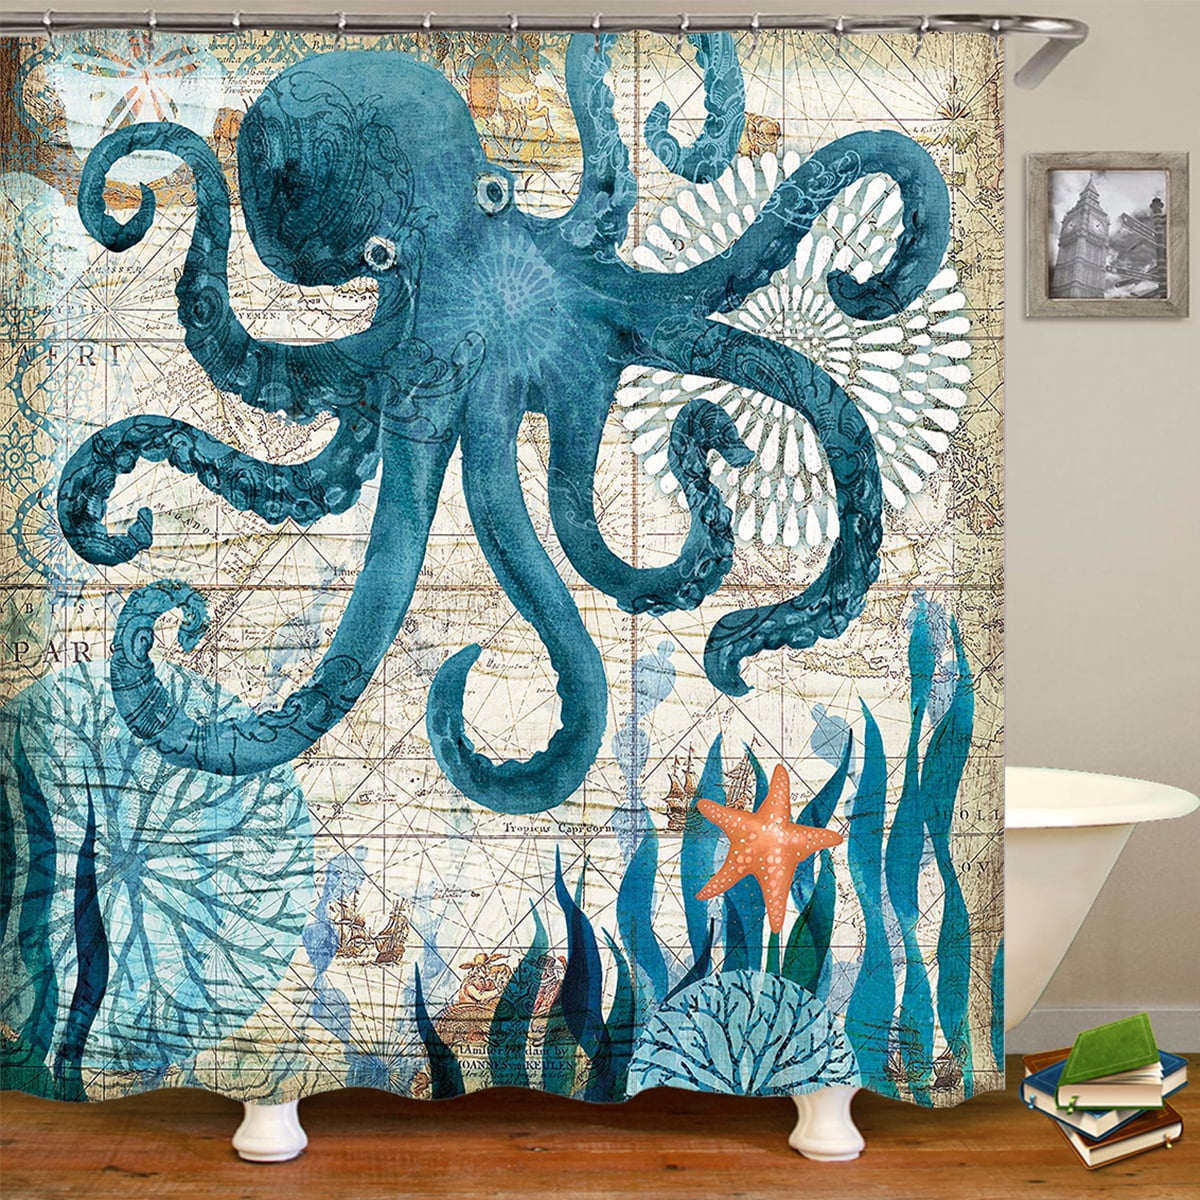 72x72" Ocean Octopus Sailing Ship Bathroom Waterproof Fabric Shower Curtain Set 